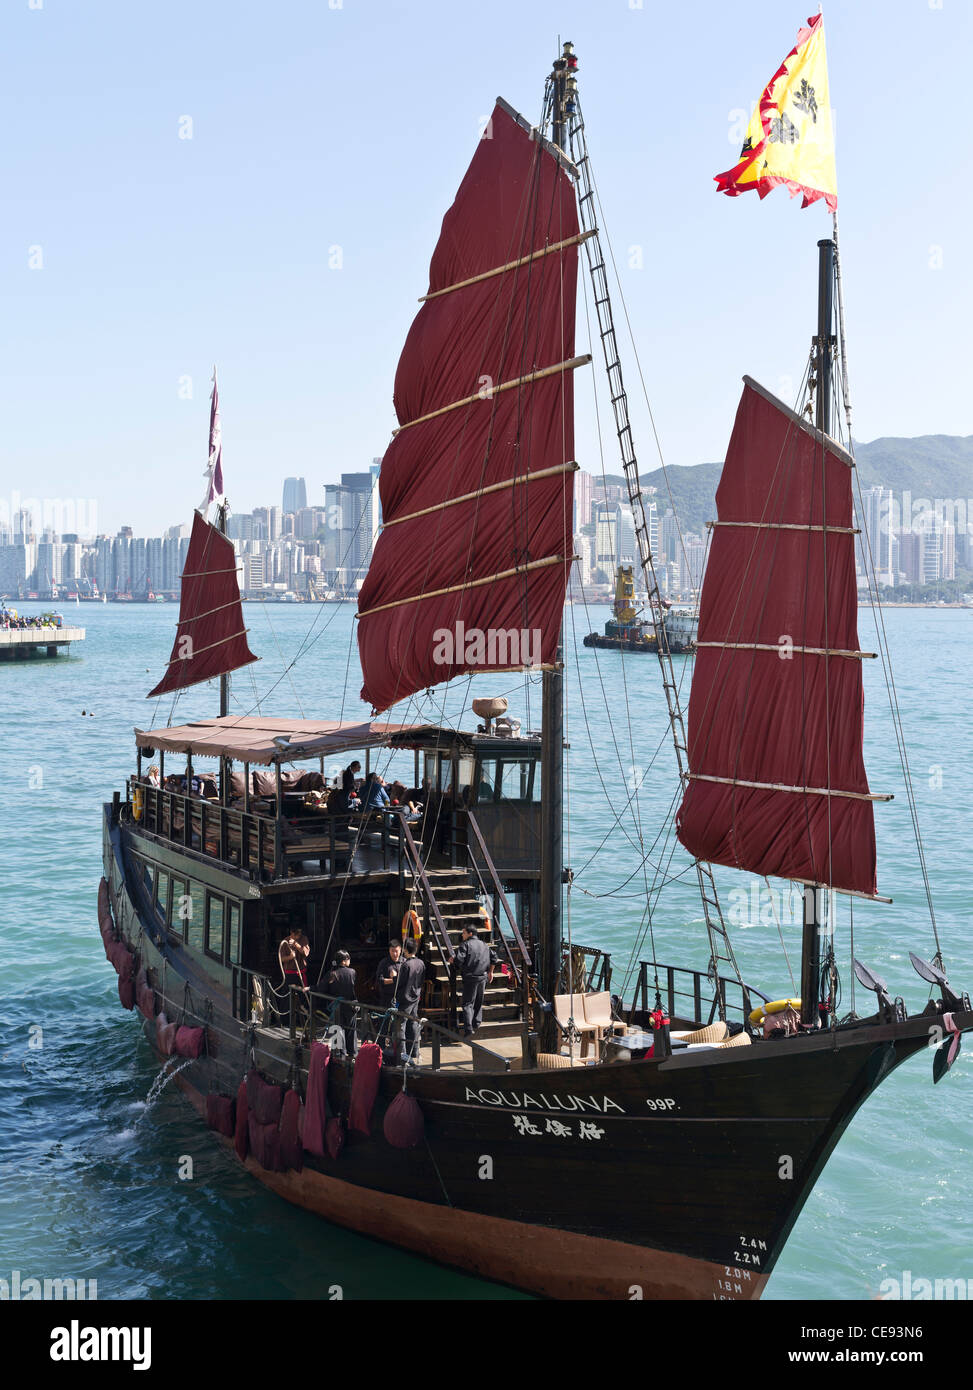 dh Aqua Luna VICTORIA HARBOR HONG KONG HARBOUR Tourist junk red sails boat sail chinese junk Stock Photo